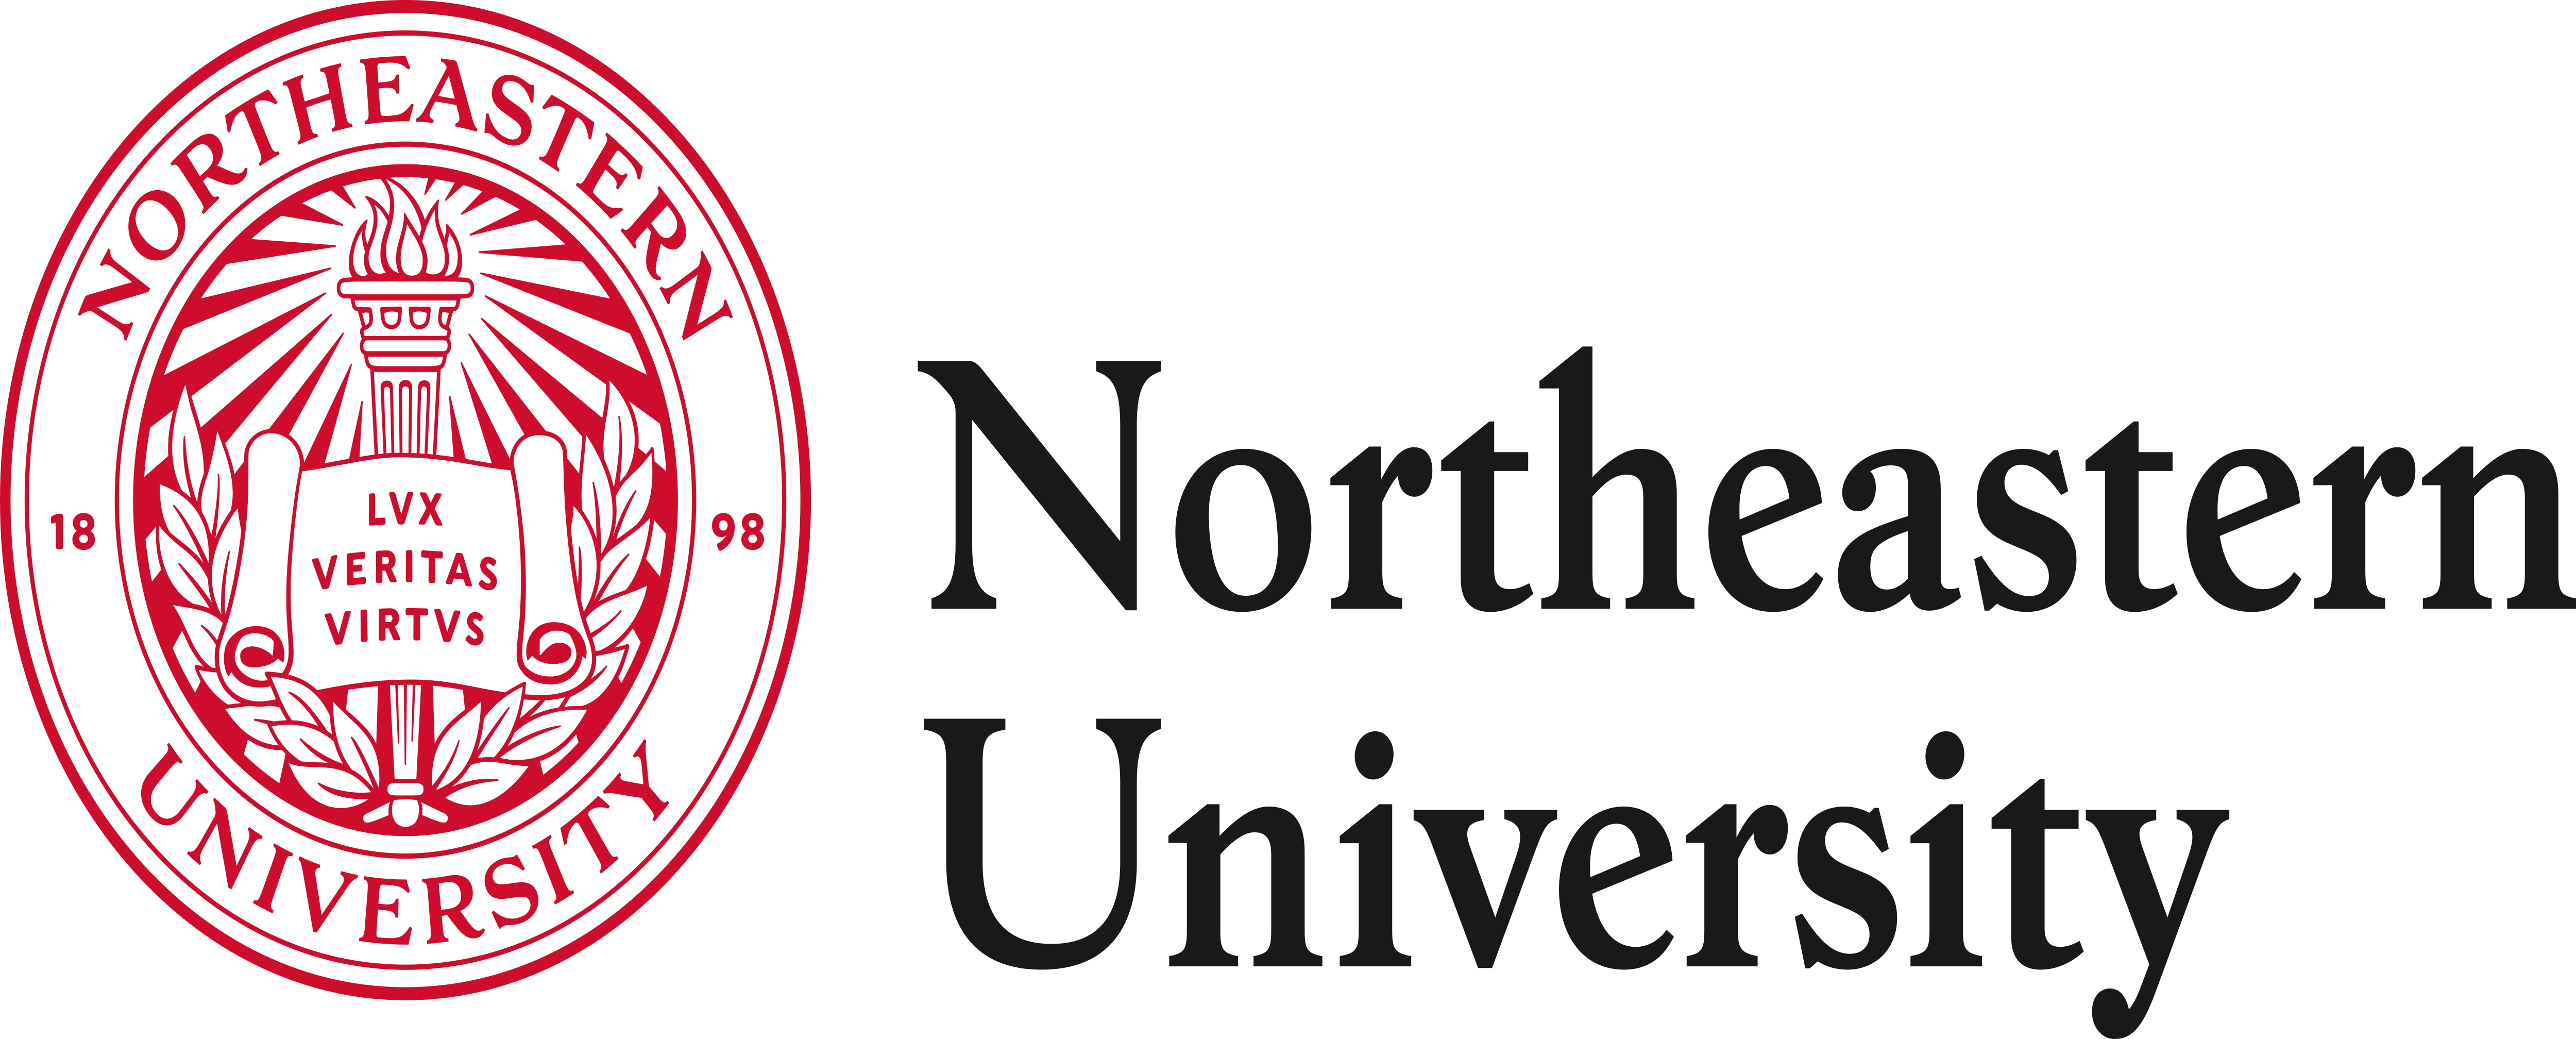 Northeastern Logo